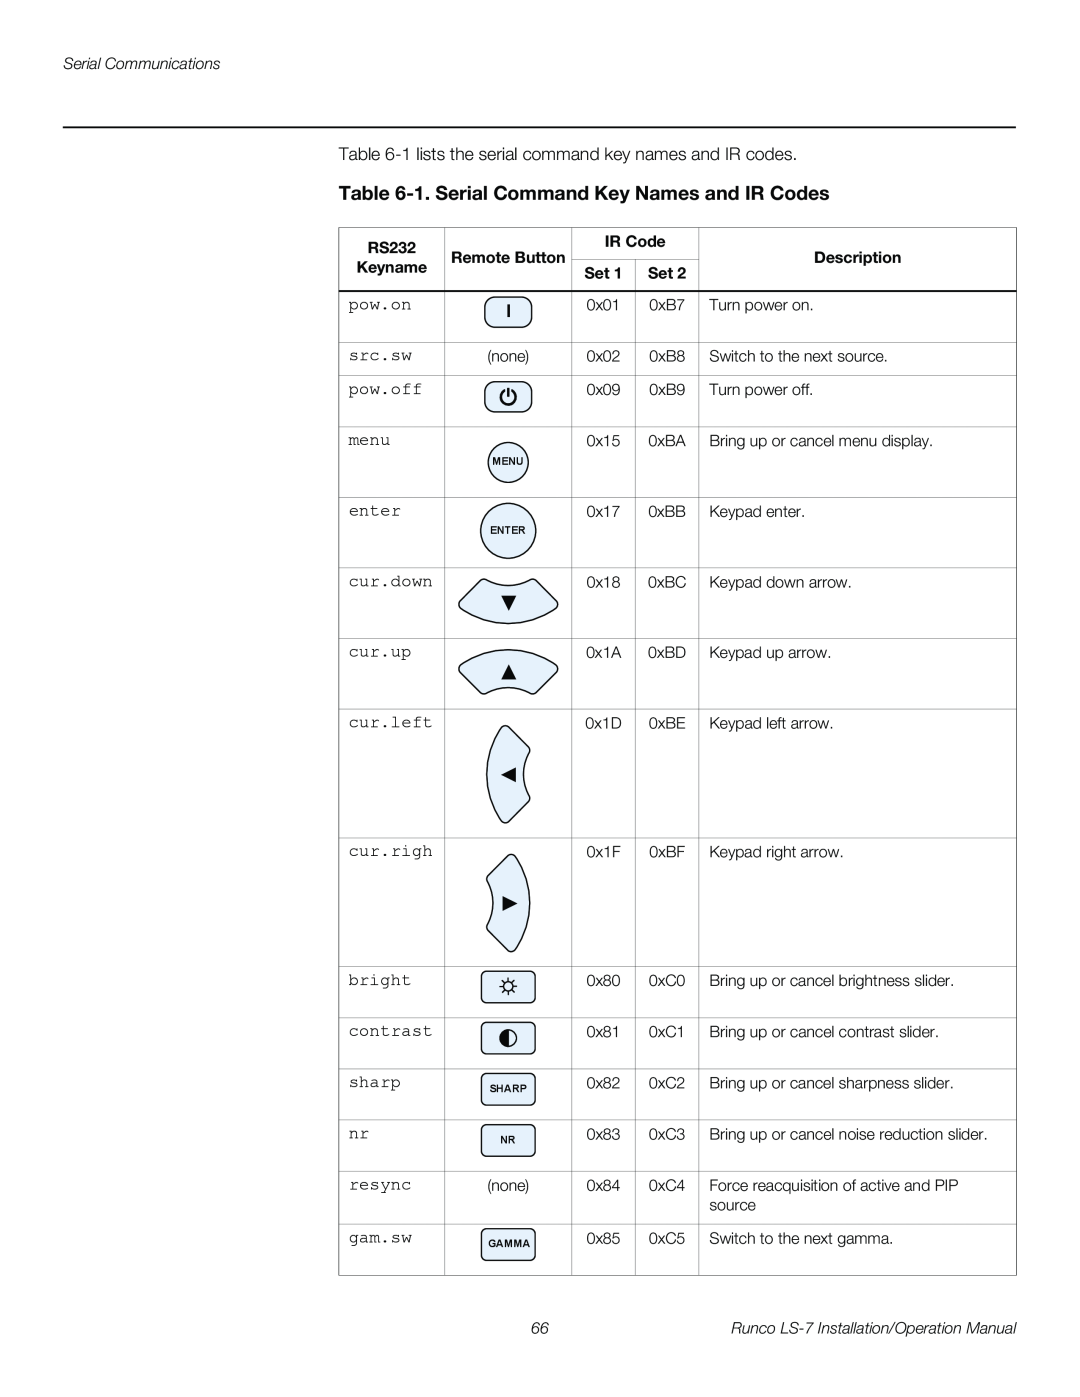 Runco LS-7 operation manual 1.Serial Command Key Names and IR Codes 